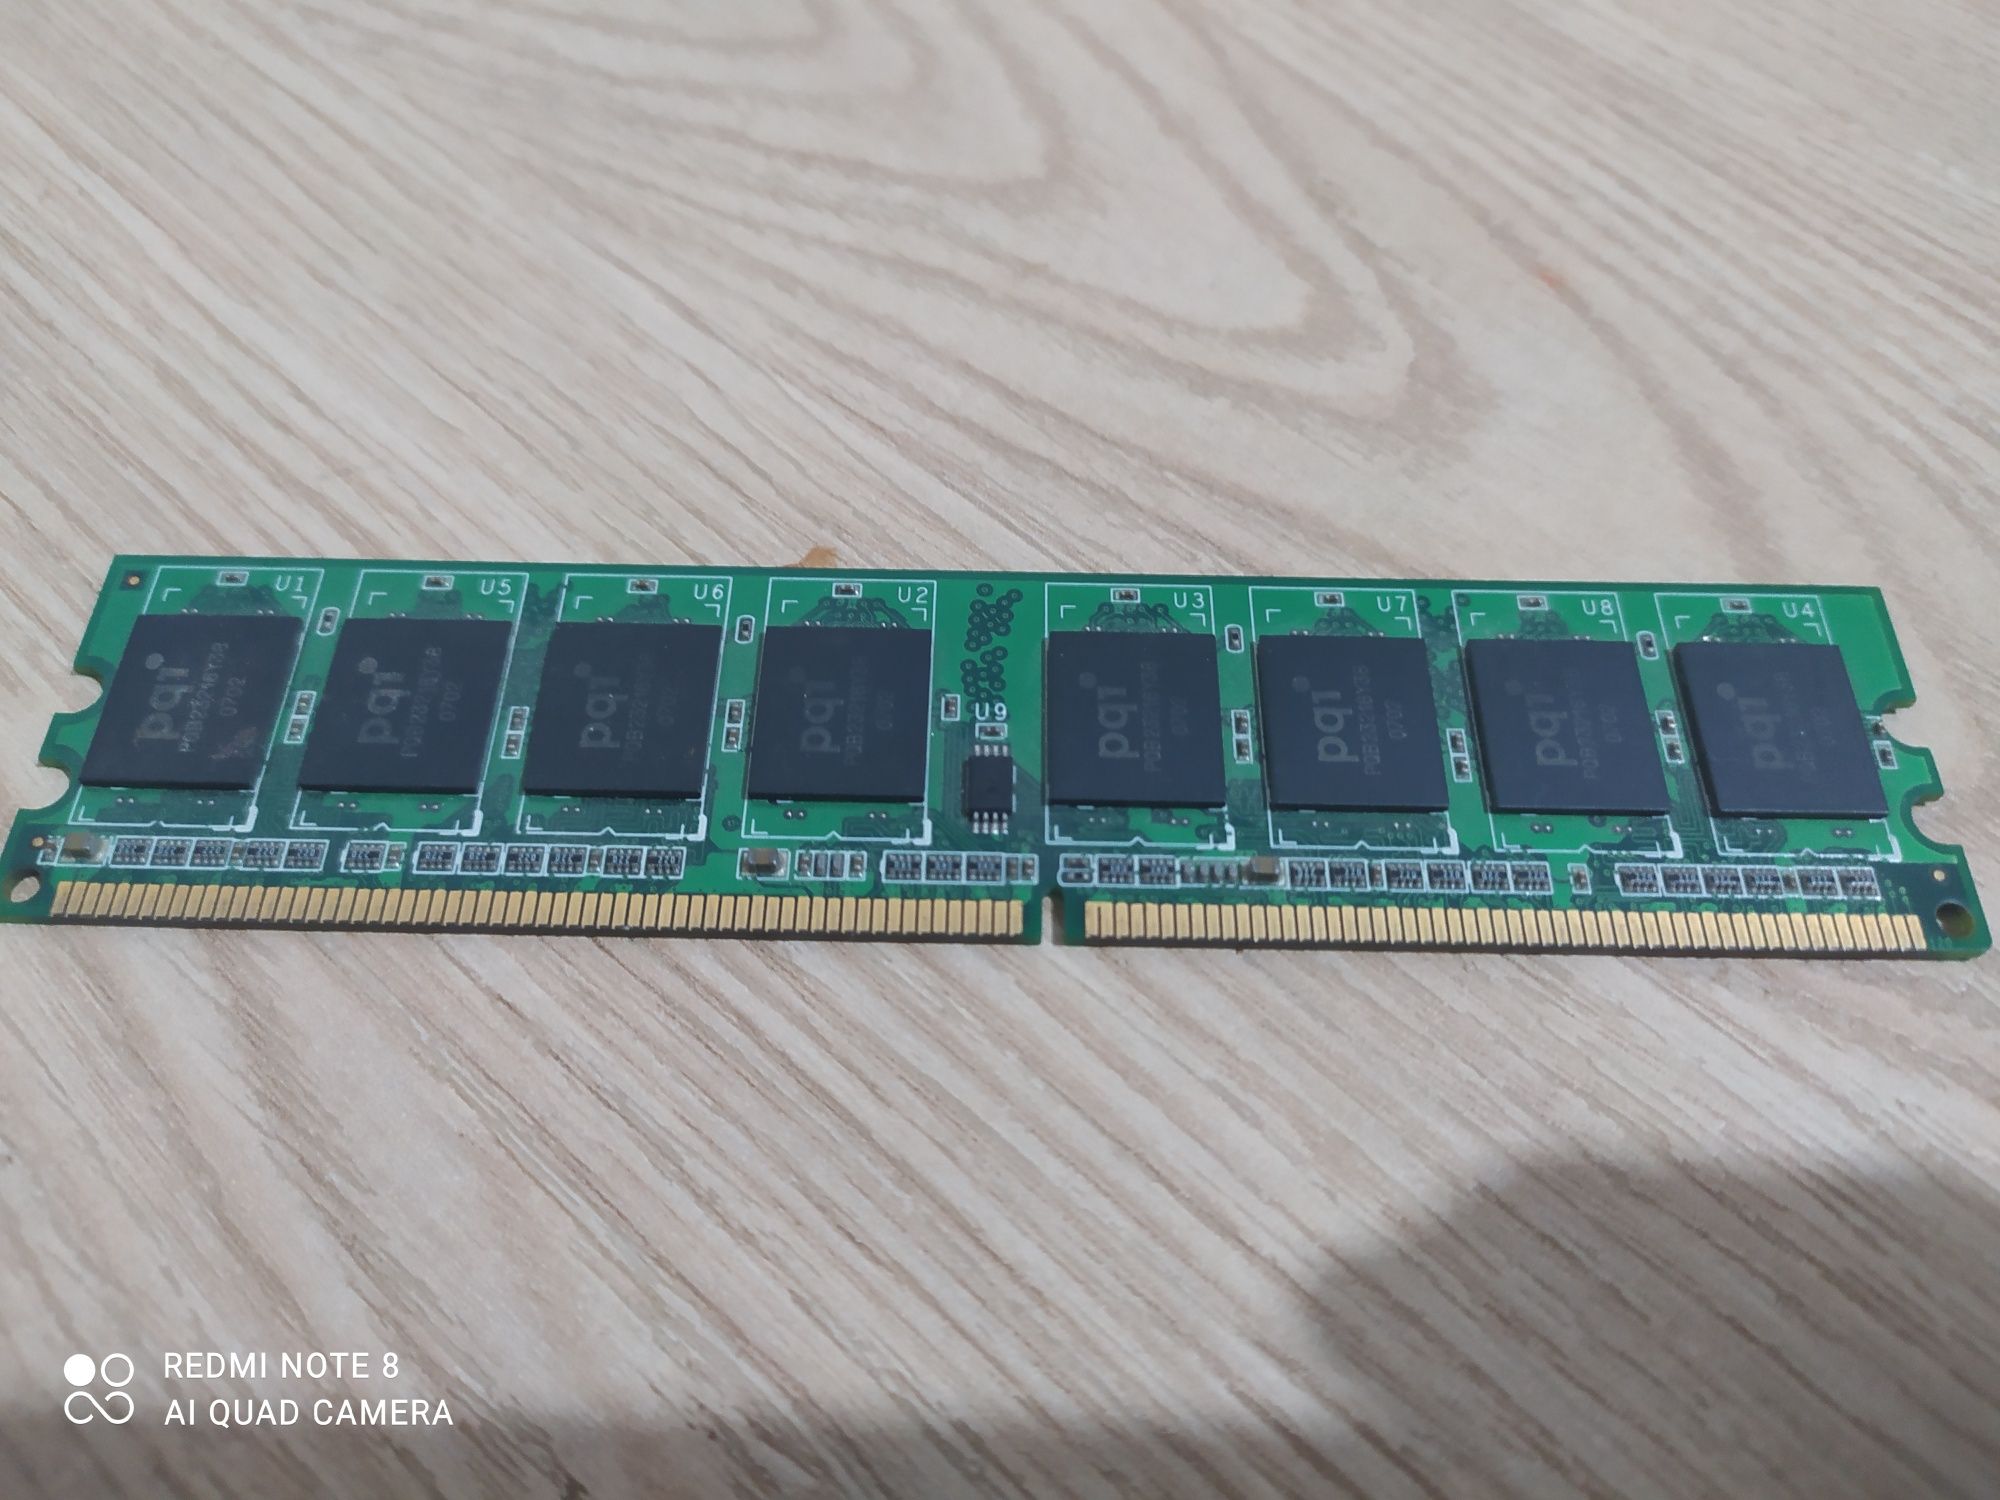 ОЗУ для компьютеров DDR2 за 2000тг/шт. обший 4шт.